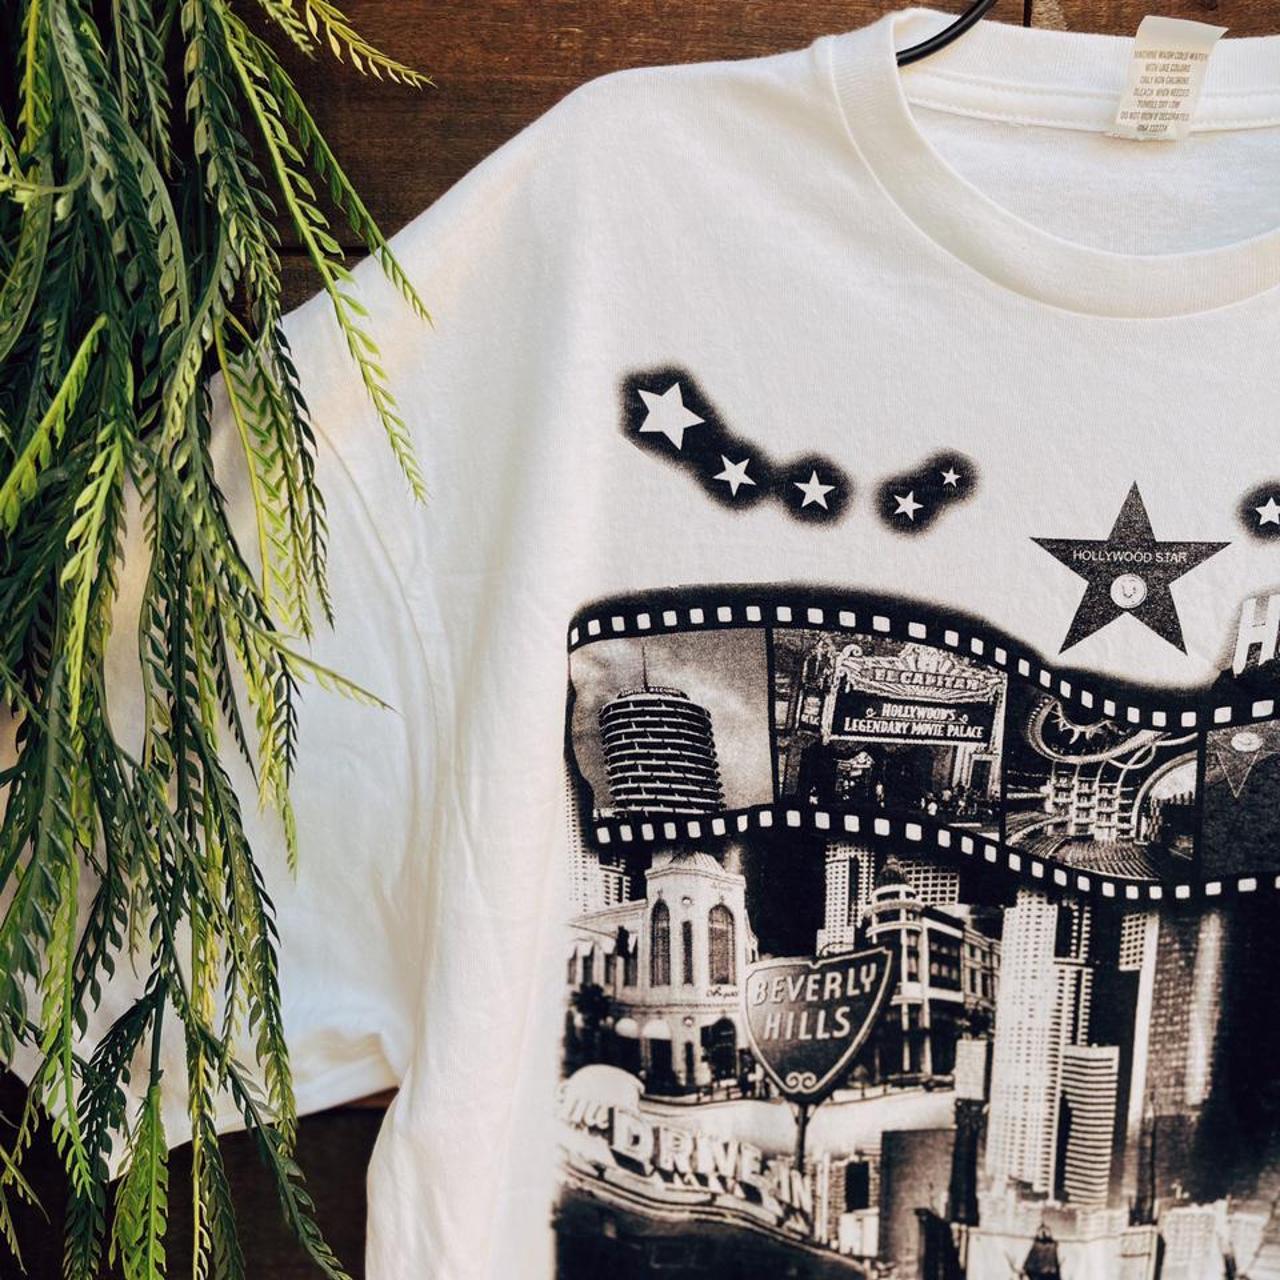 Product Image 4 - 🌵🤘🏻 Vintage Hollywood T-shirt 🤘🏻🌵

📦